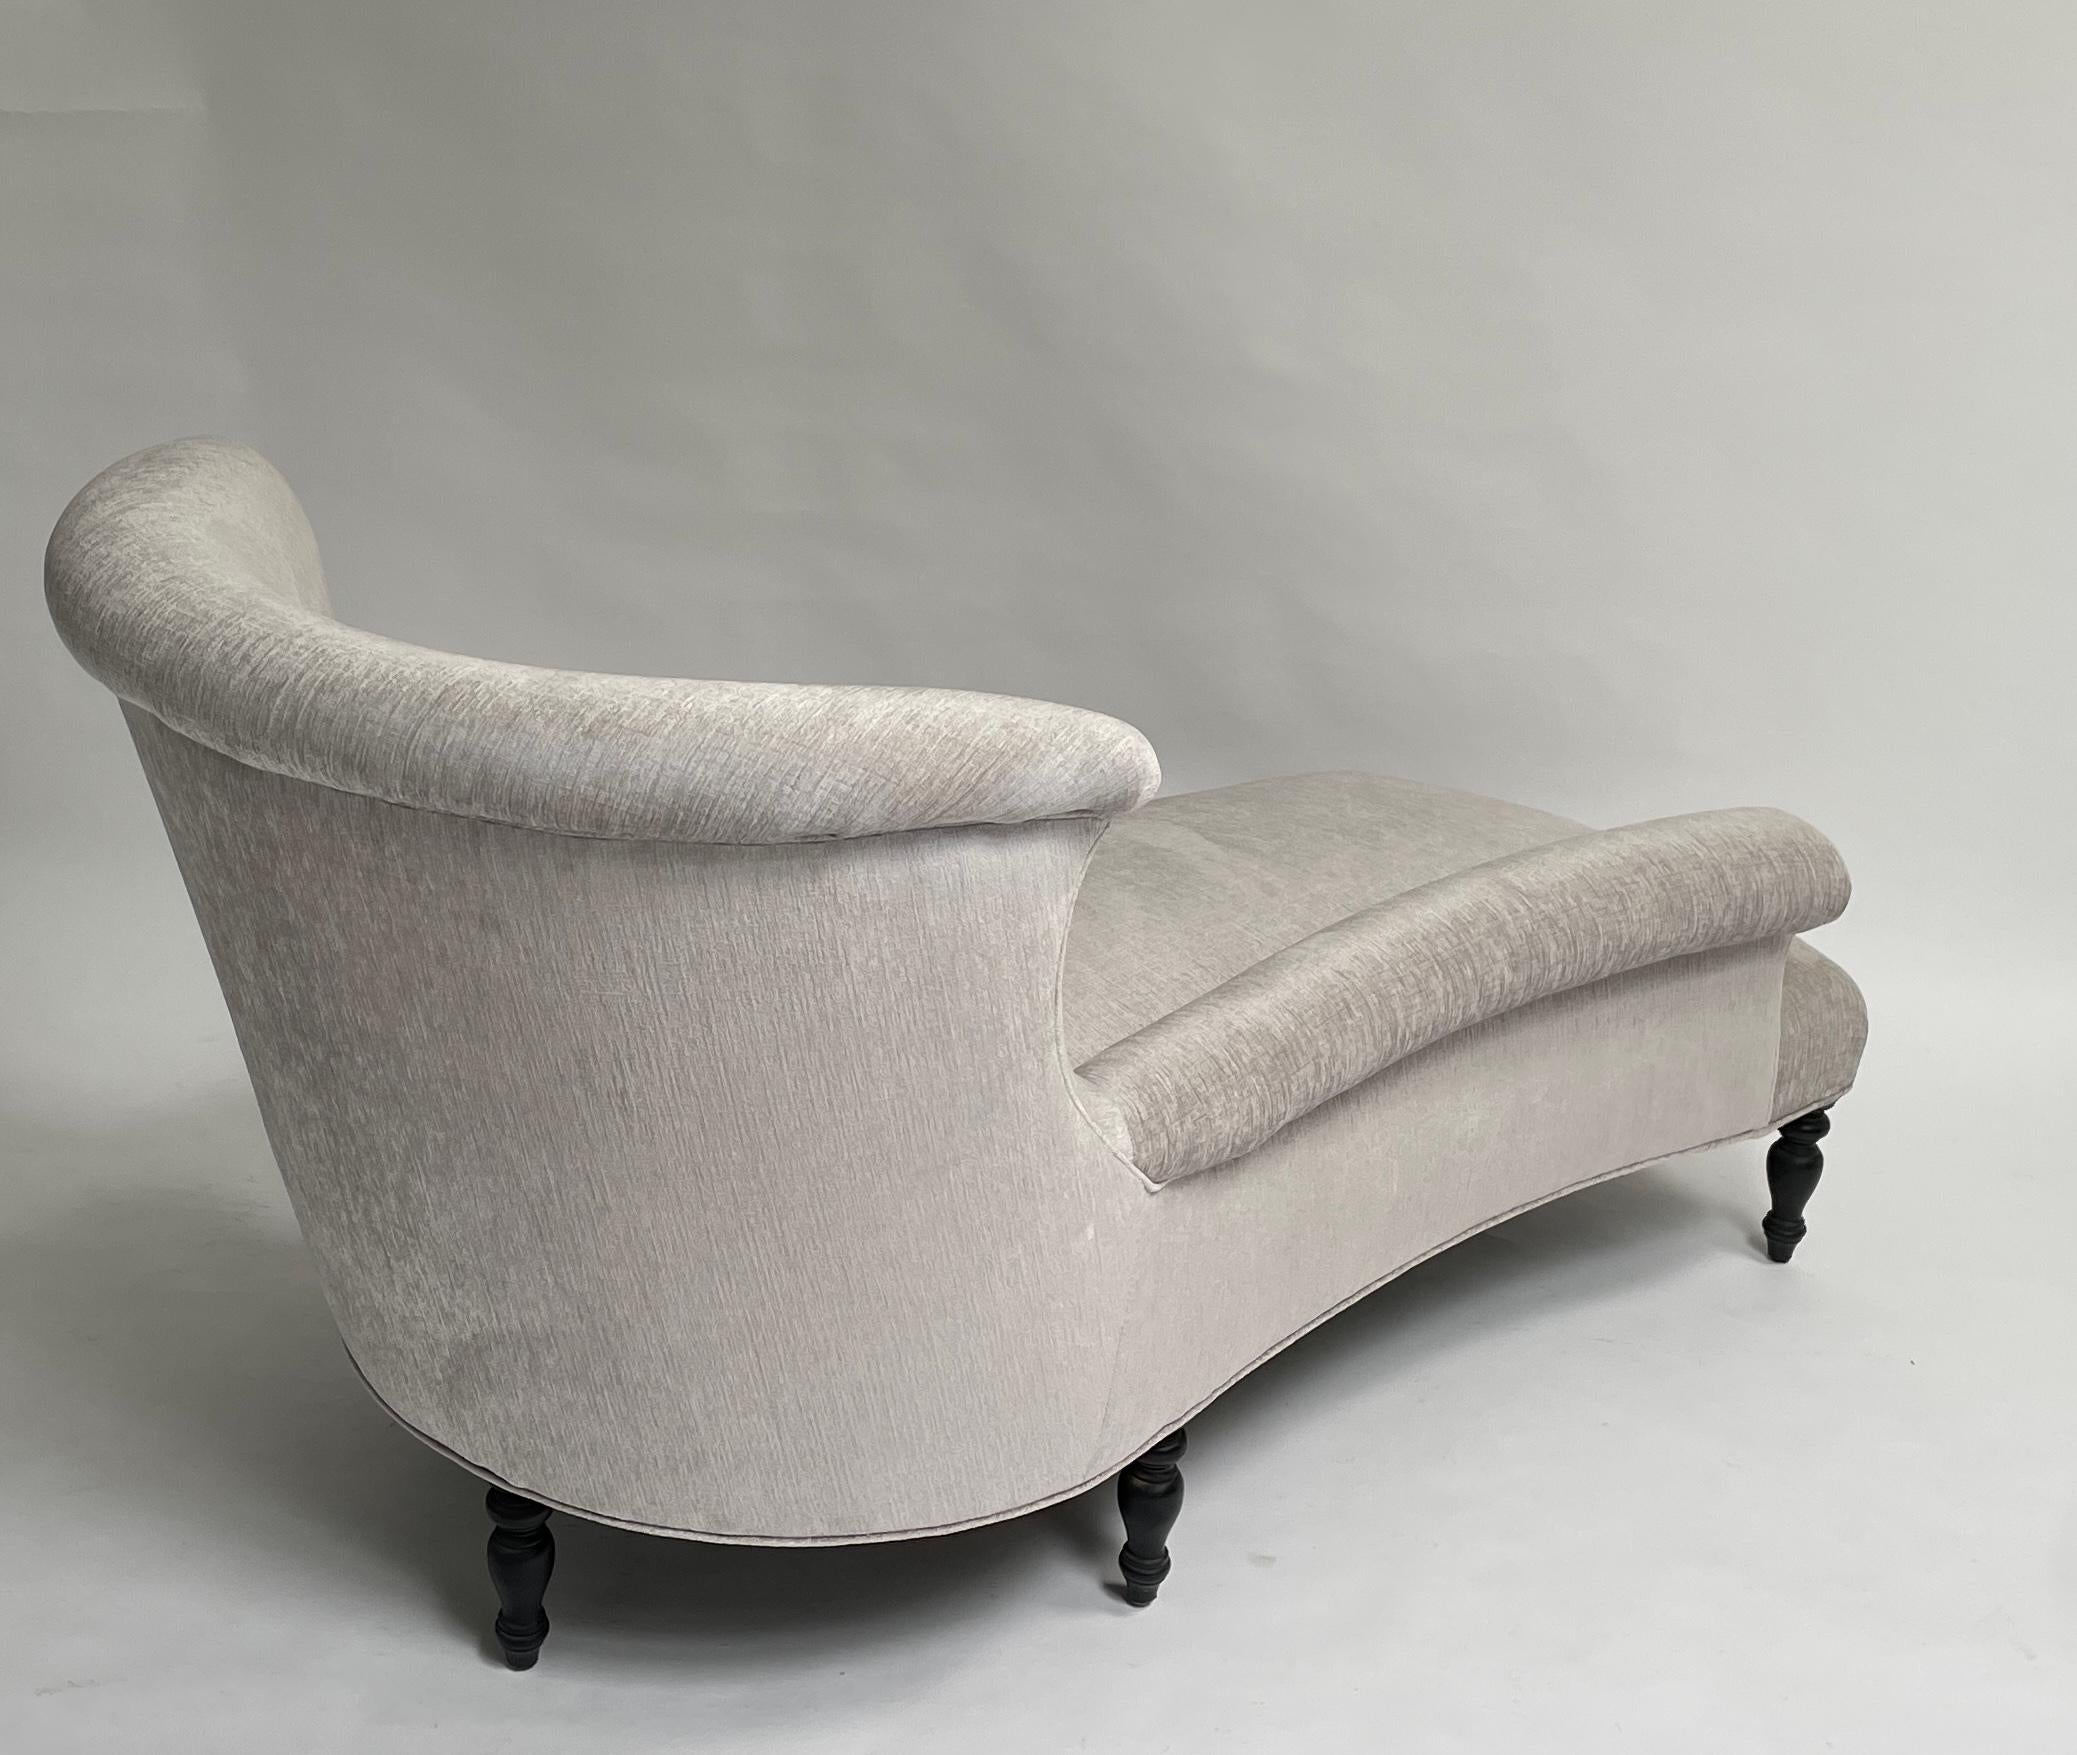 Garronne Chaise Lounge by Bourgeois Boheme Atelier, Silver For Sale 3